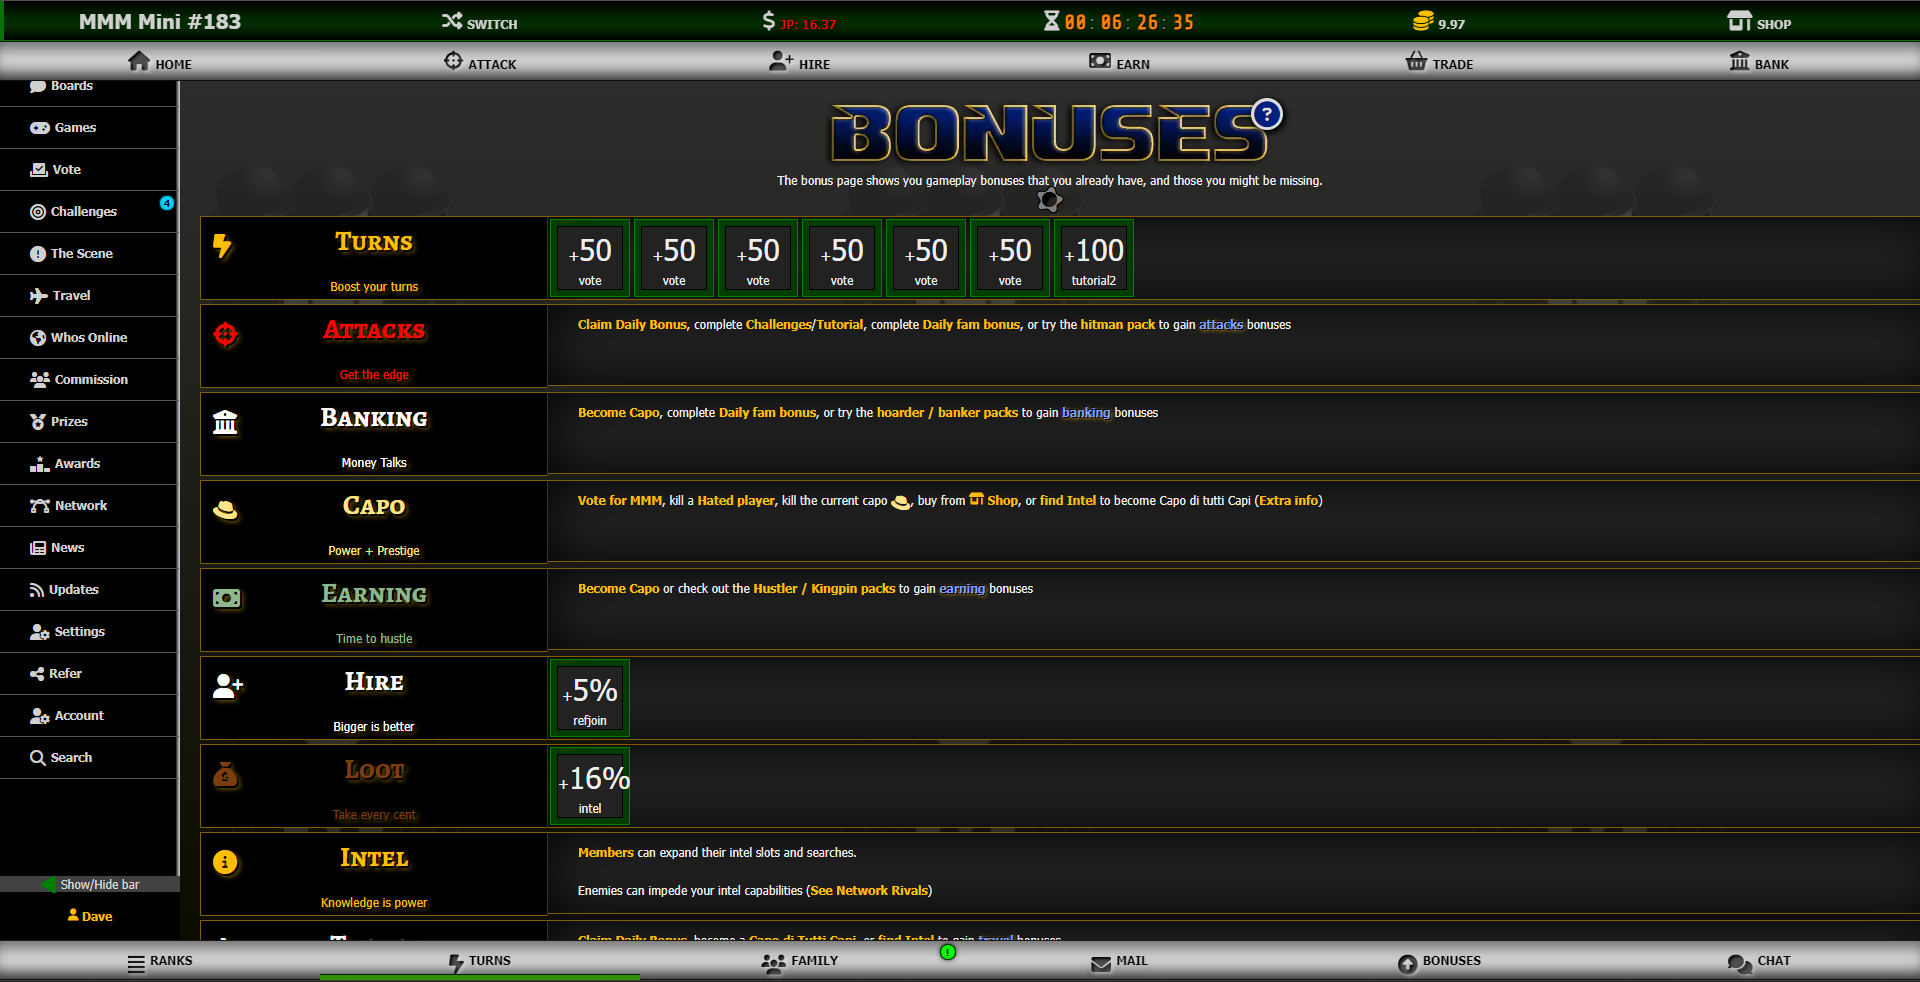 Made Man Mafia online mafia game. Gameplay screenshot of bonuses page displaying a rich bonus system of stacking bonuses